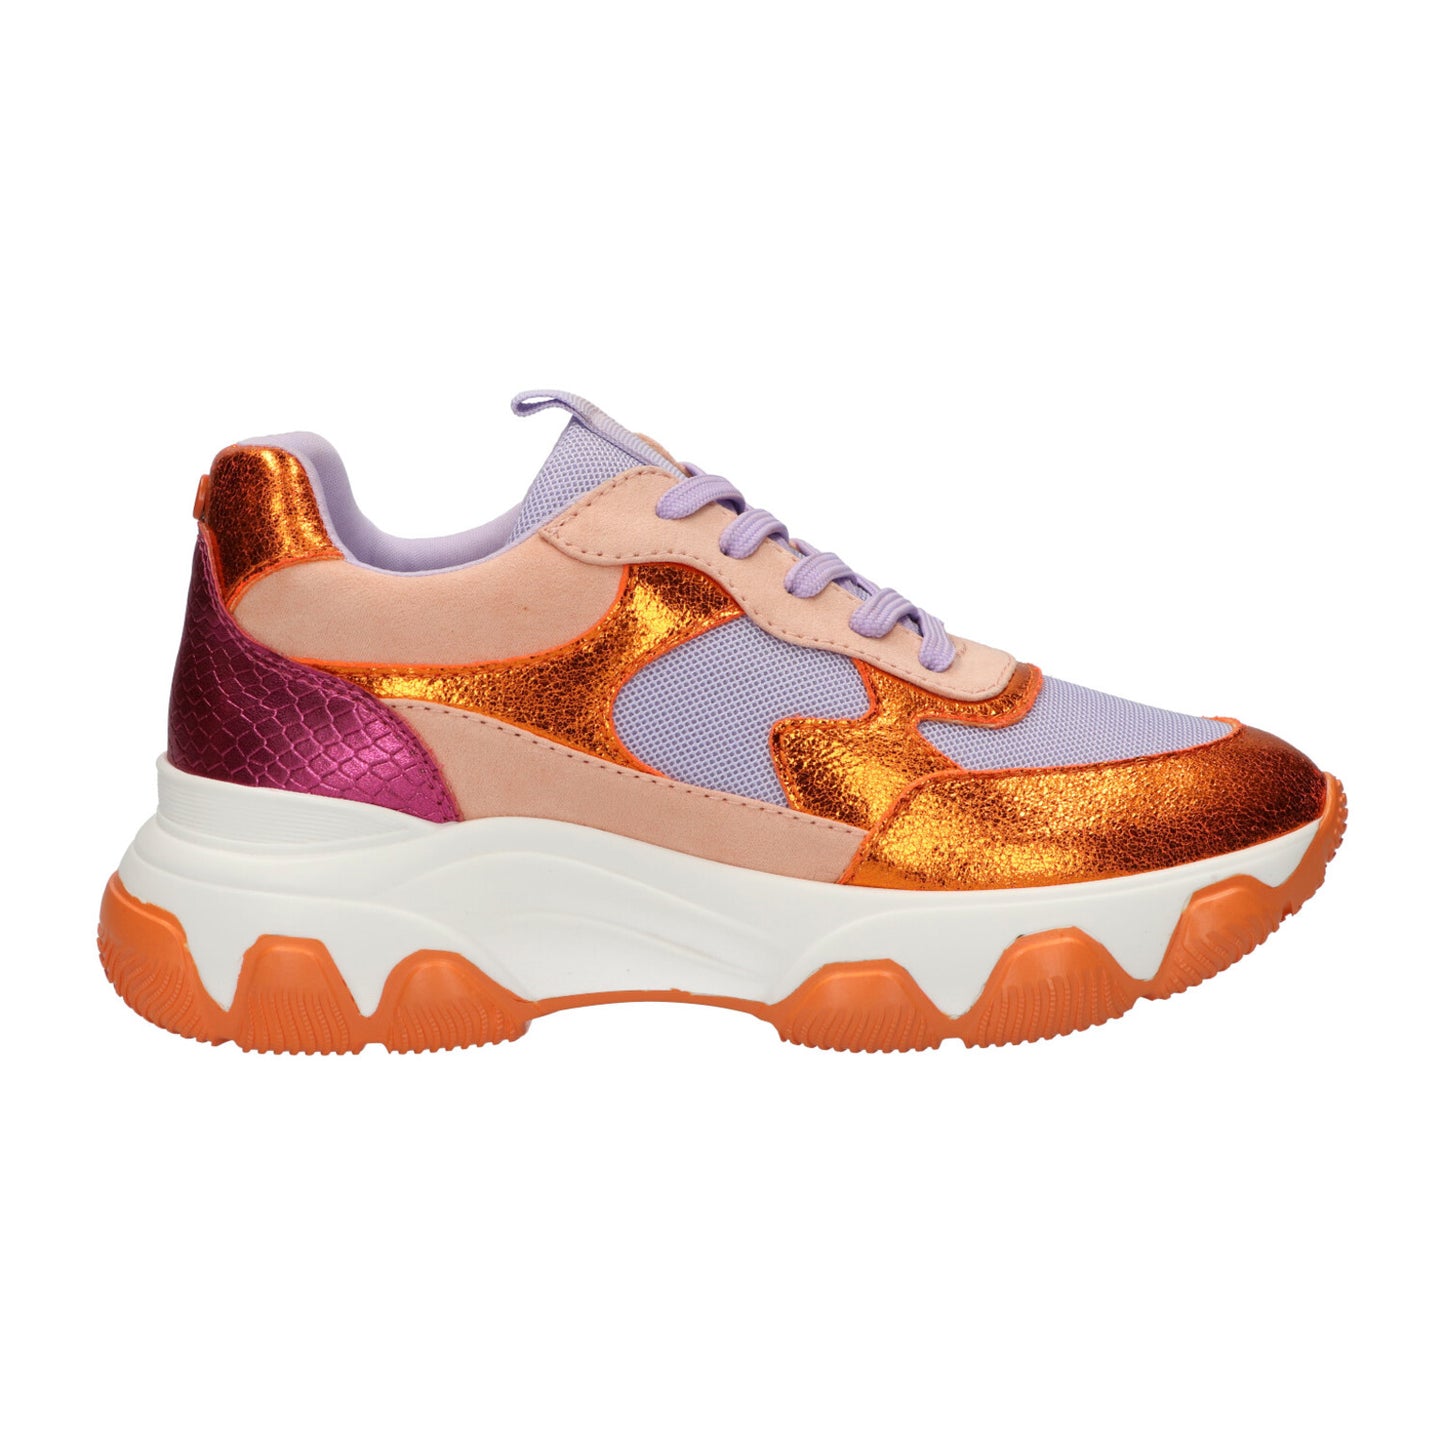 Oranjekleurige sneakers van La Strada 2123317